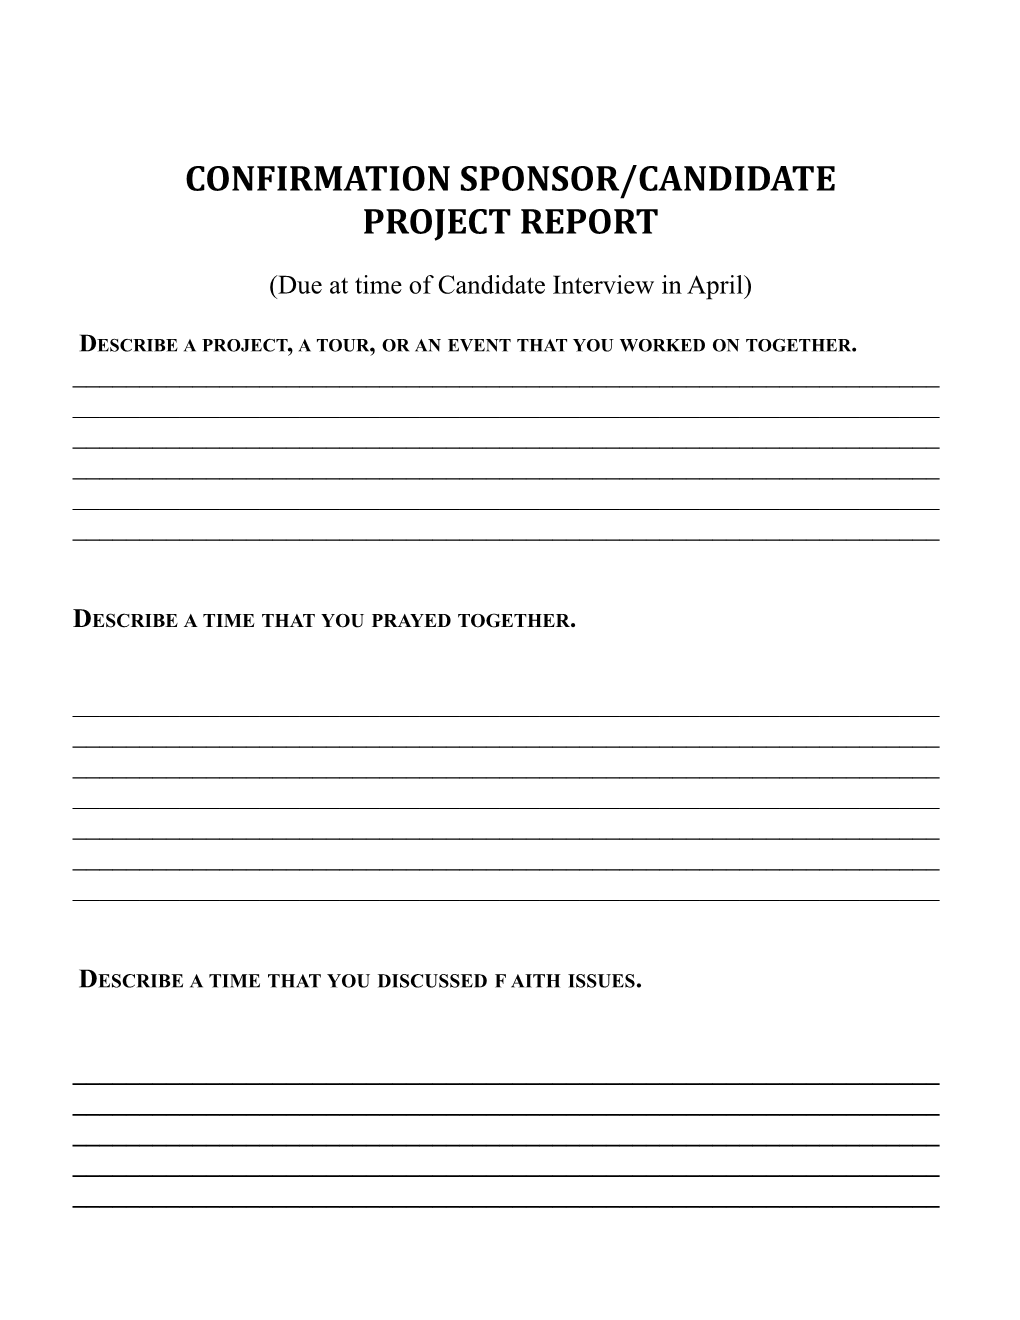 Confirmation Sponsor/Candidate